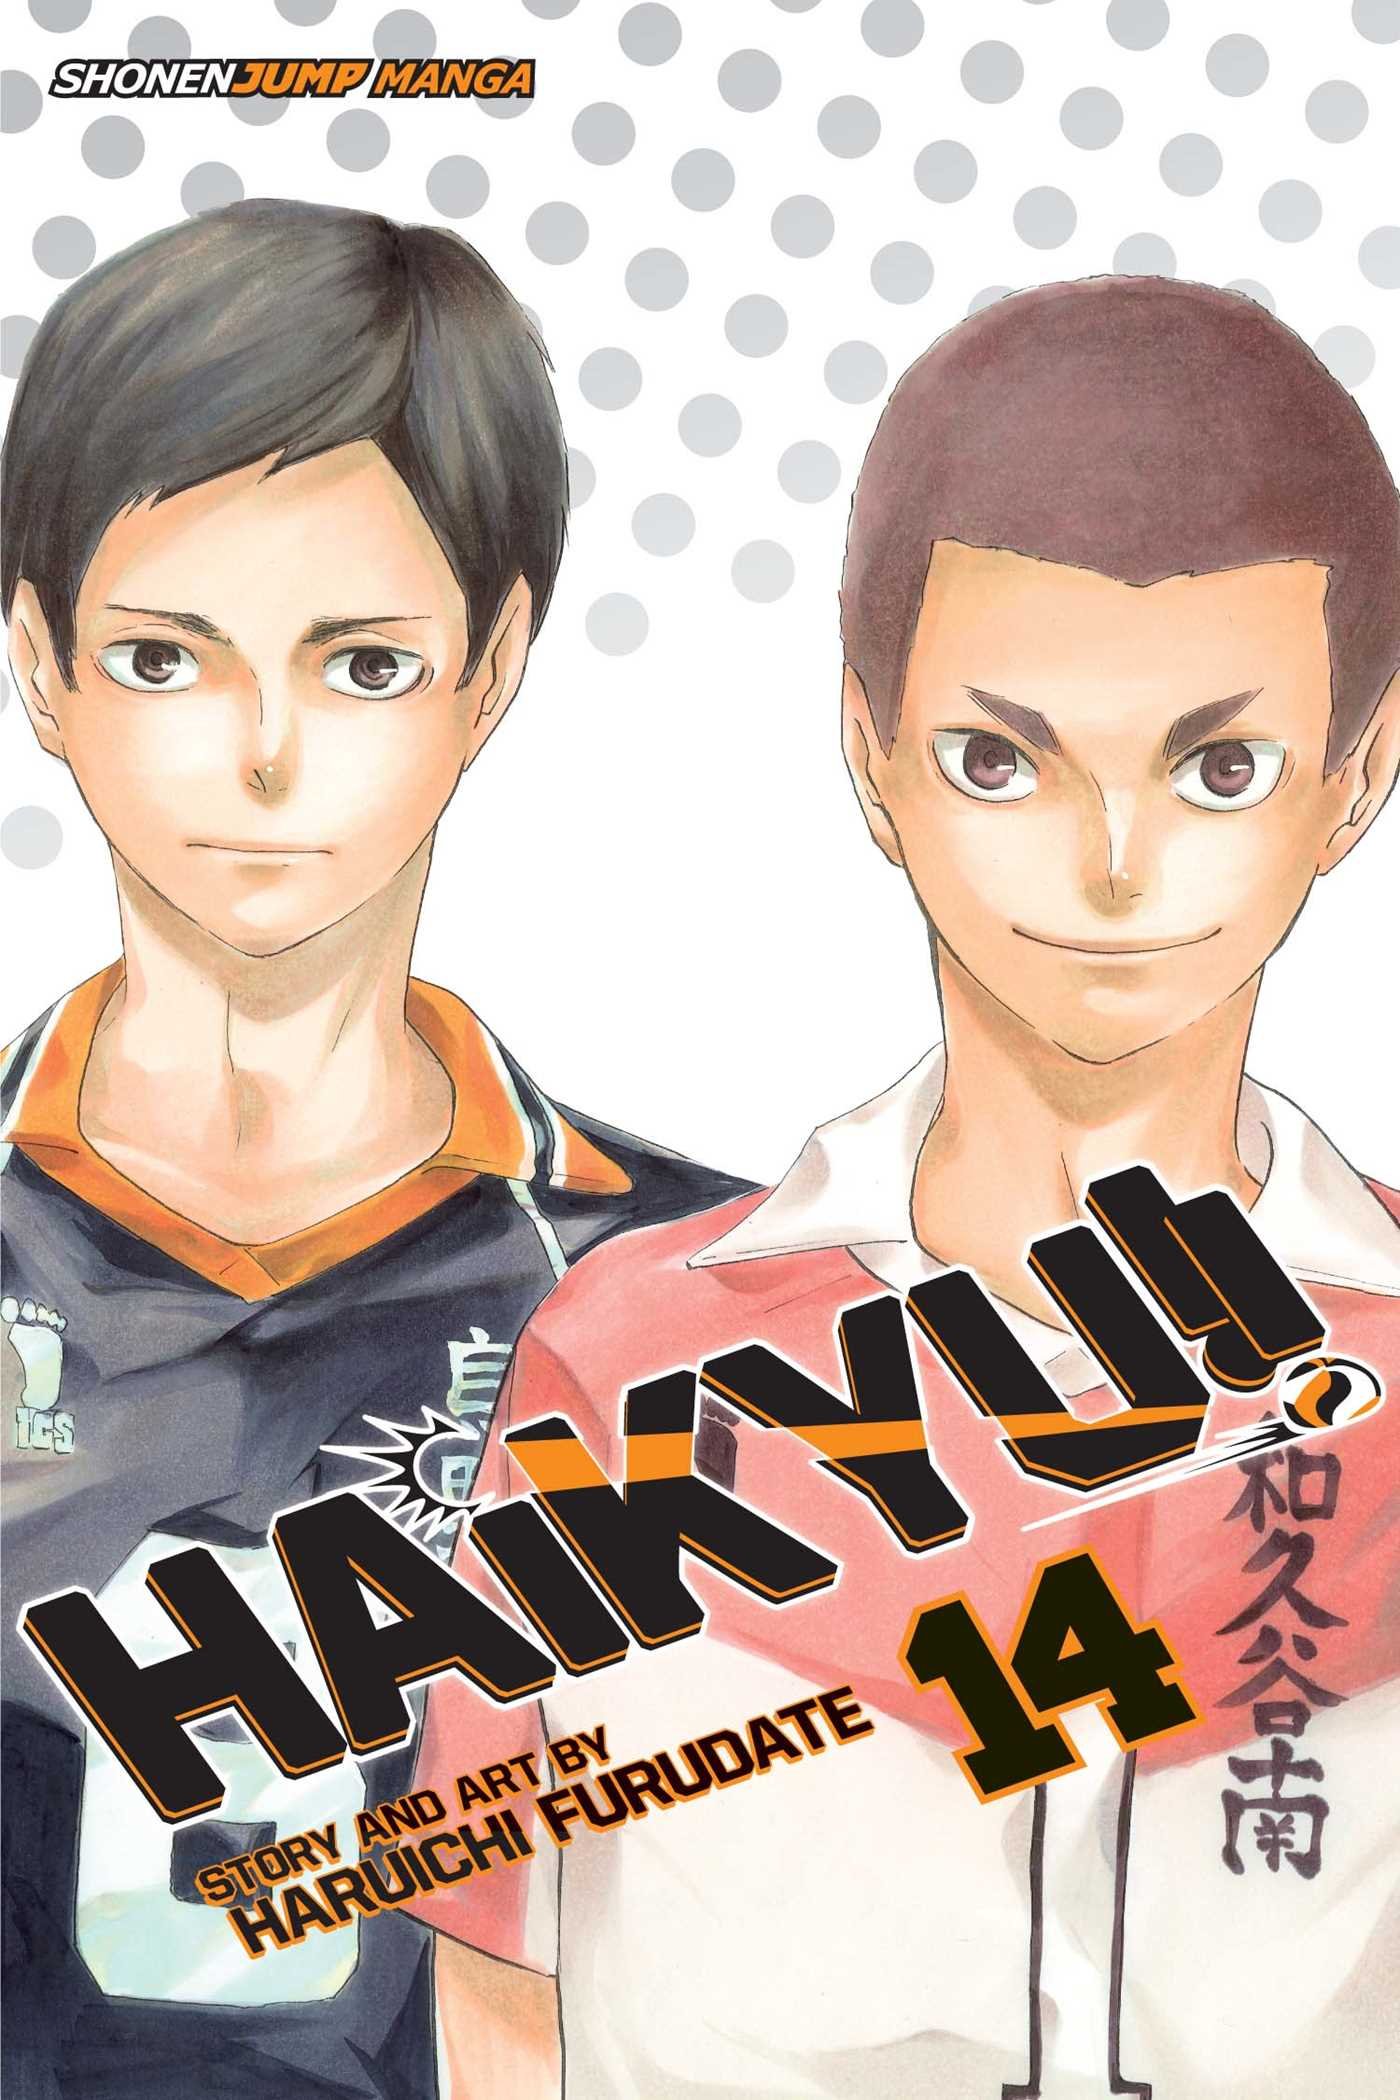 Haikyu!! Volume 14 | Haruichi Furudate